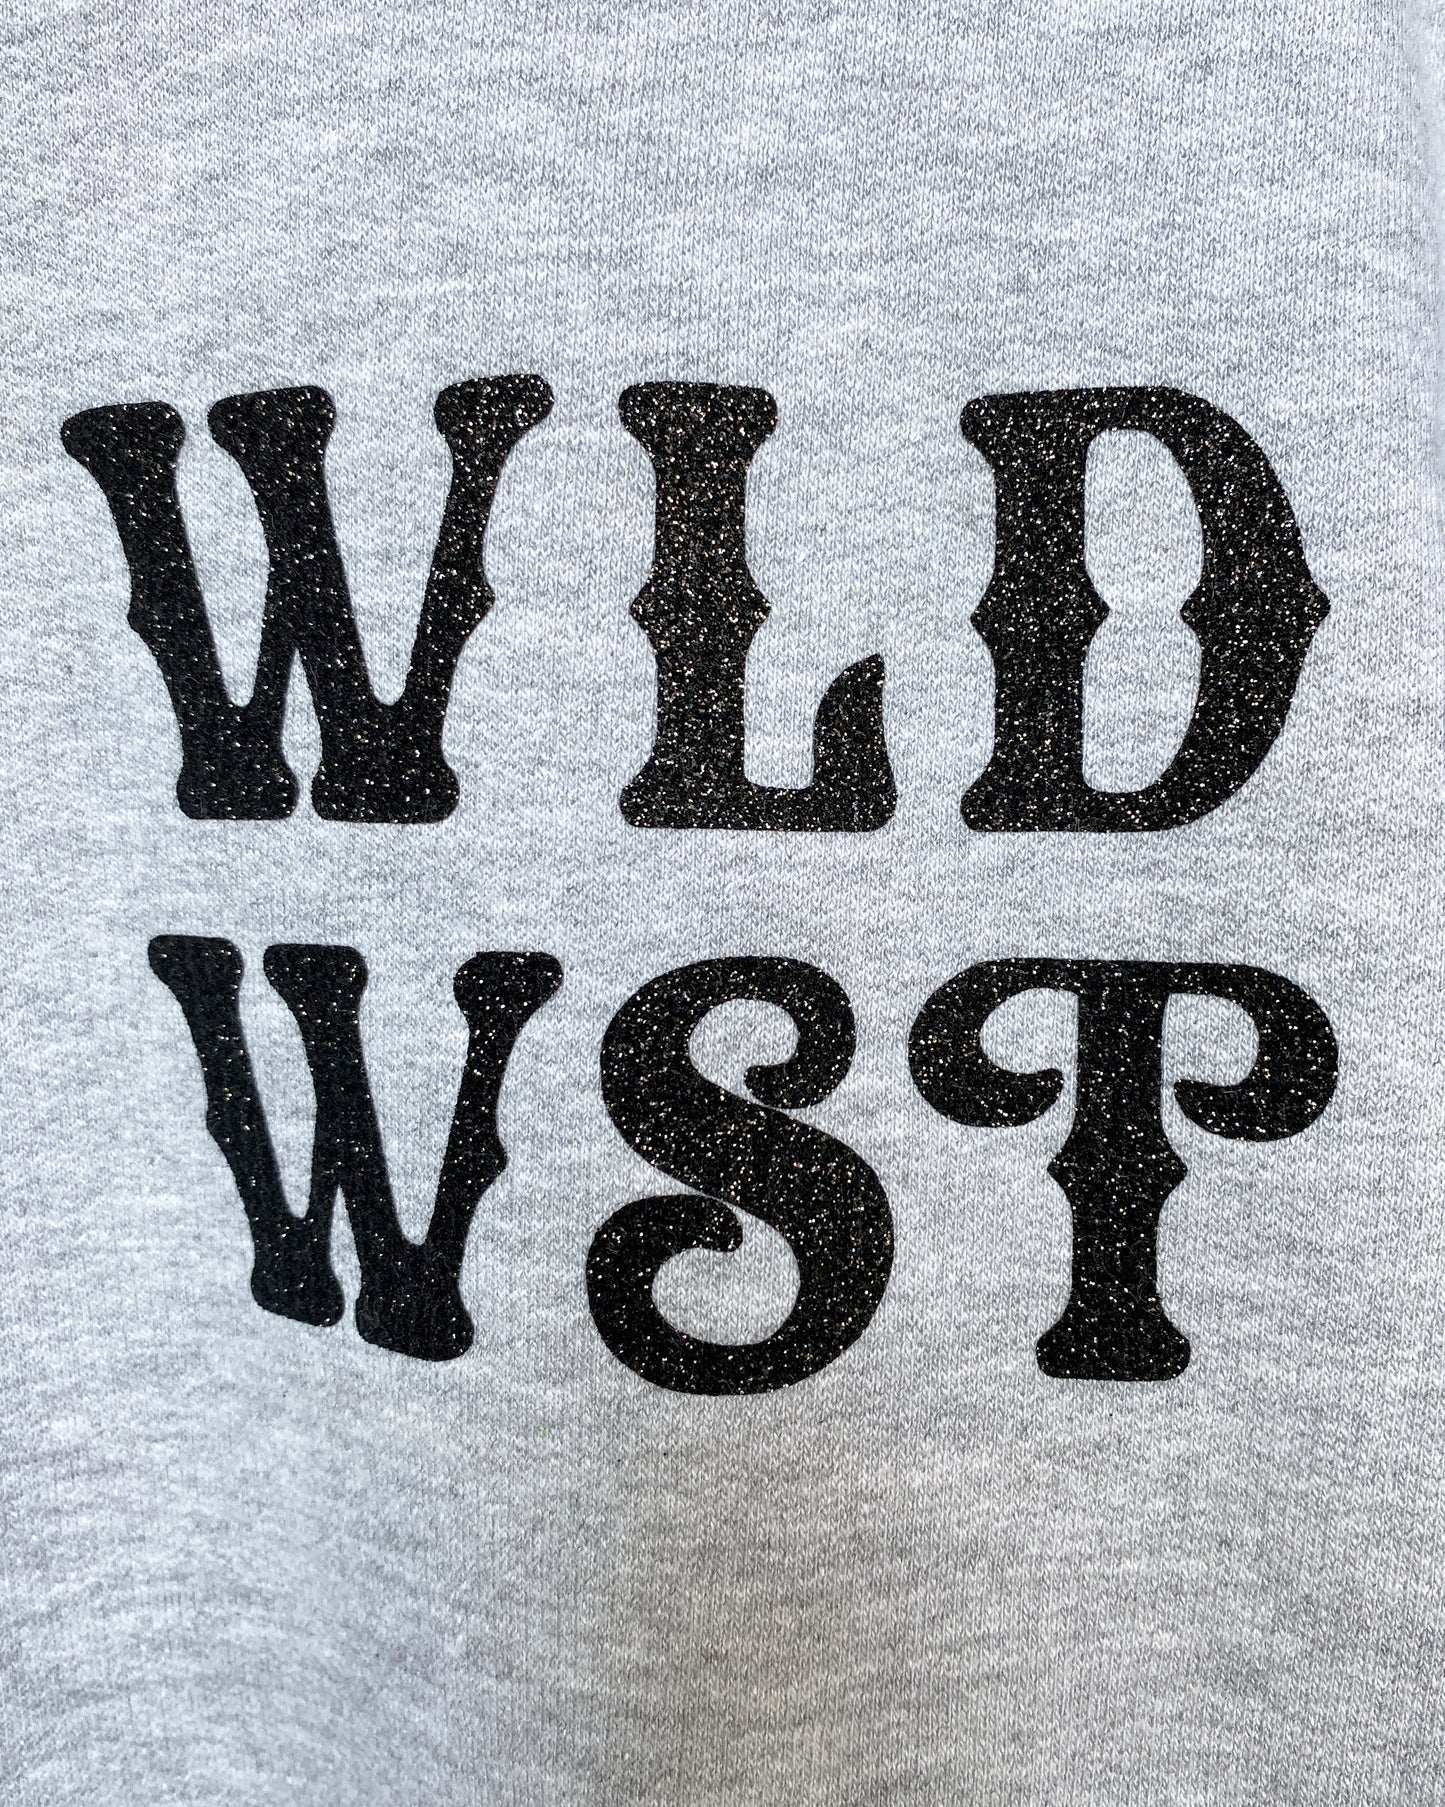 WLD WST Western Graphic Sweatshirt - Grey Sweatshirt